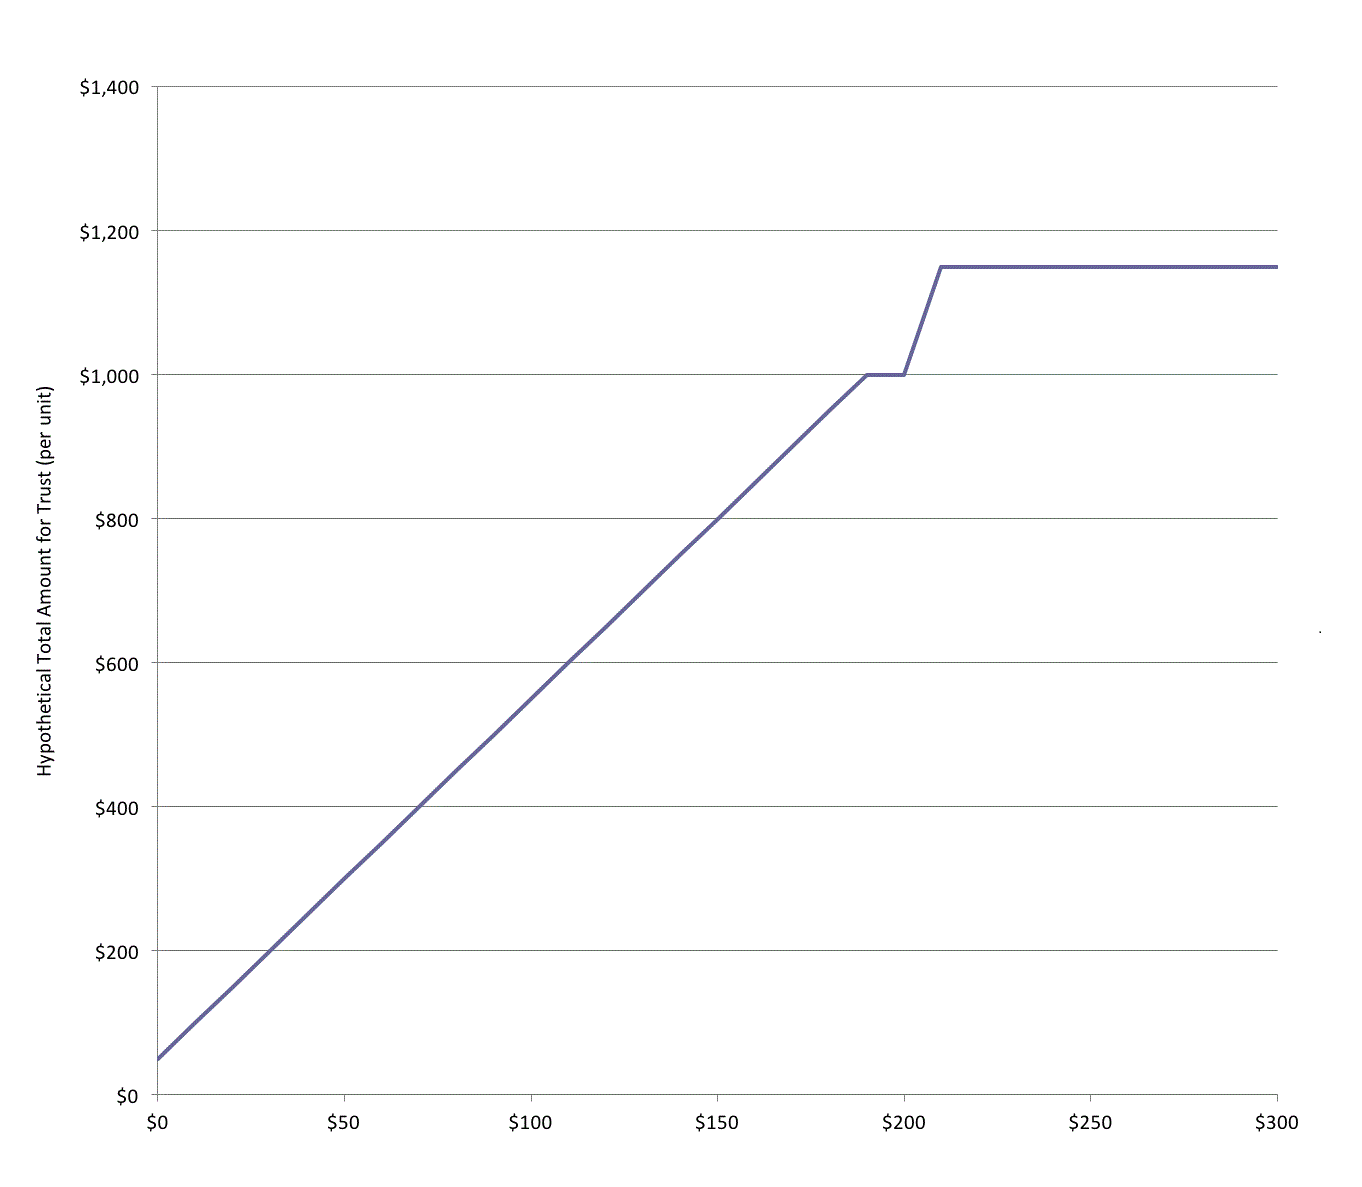 [GRAPH: Hypothetical Total Amount for Trust (per unit)]